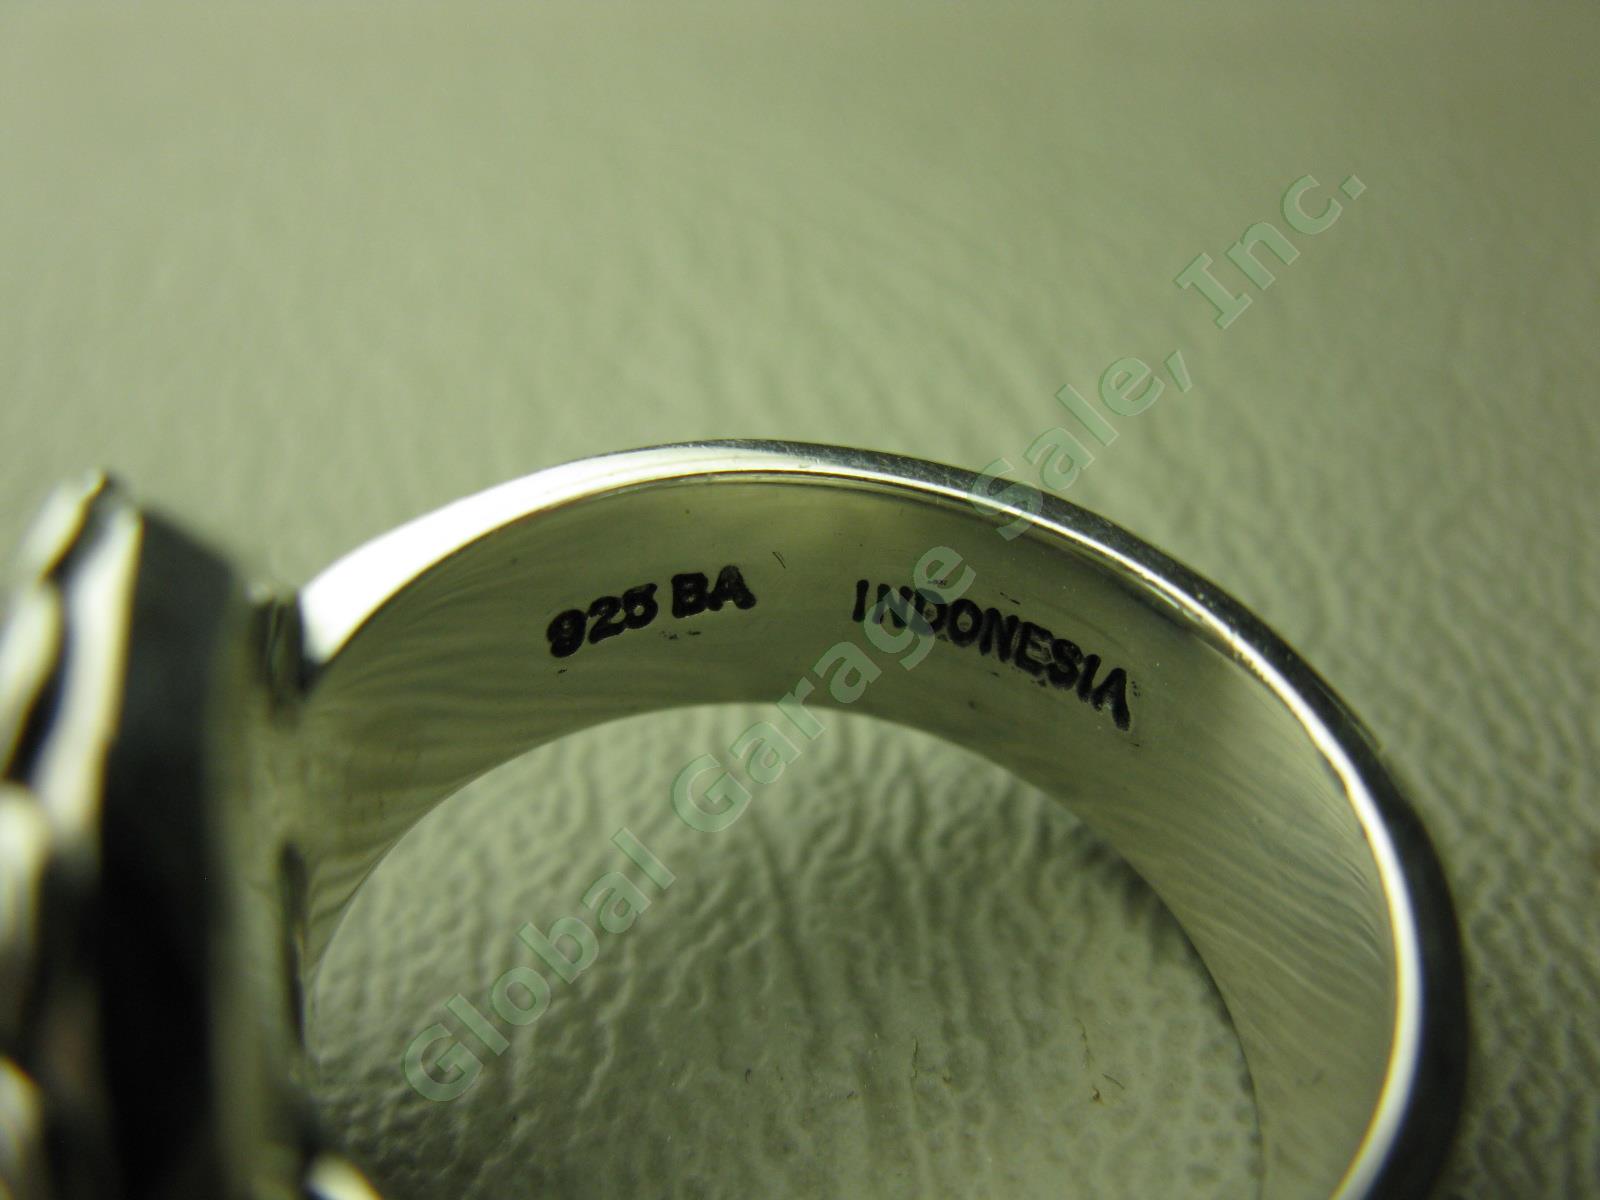 Suarti Bali Sterling Silver Blue Topaz Pendant Ring Earring Set 925 BA Indonesia 7